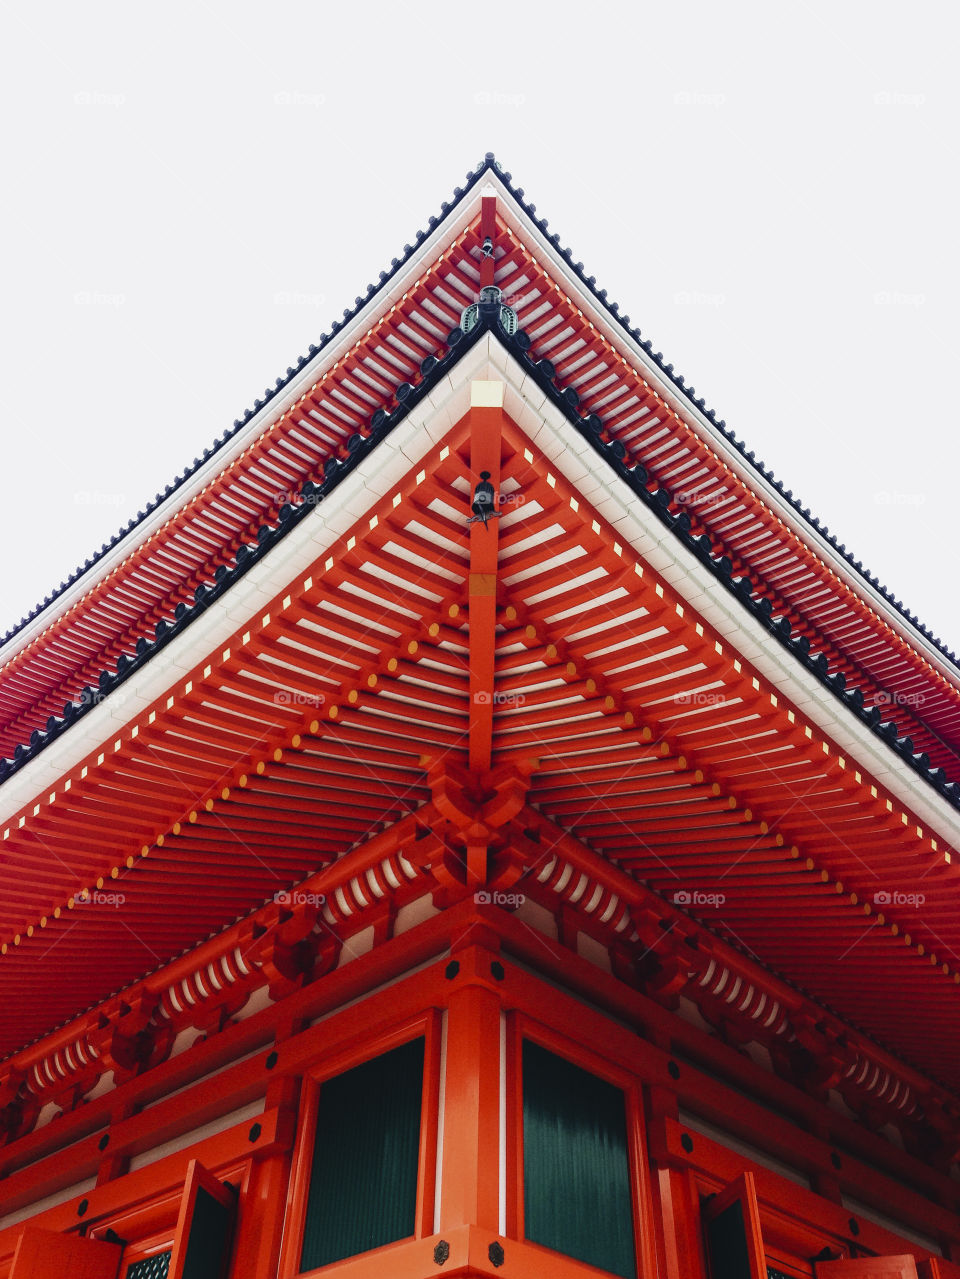 Temple. Temple roof in Koyasan, Japan